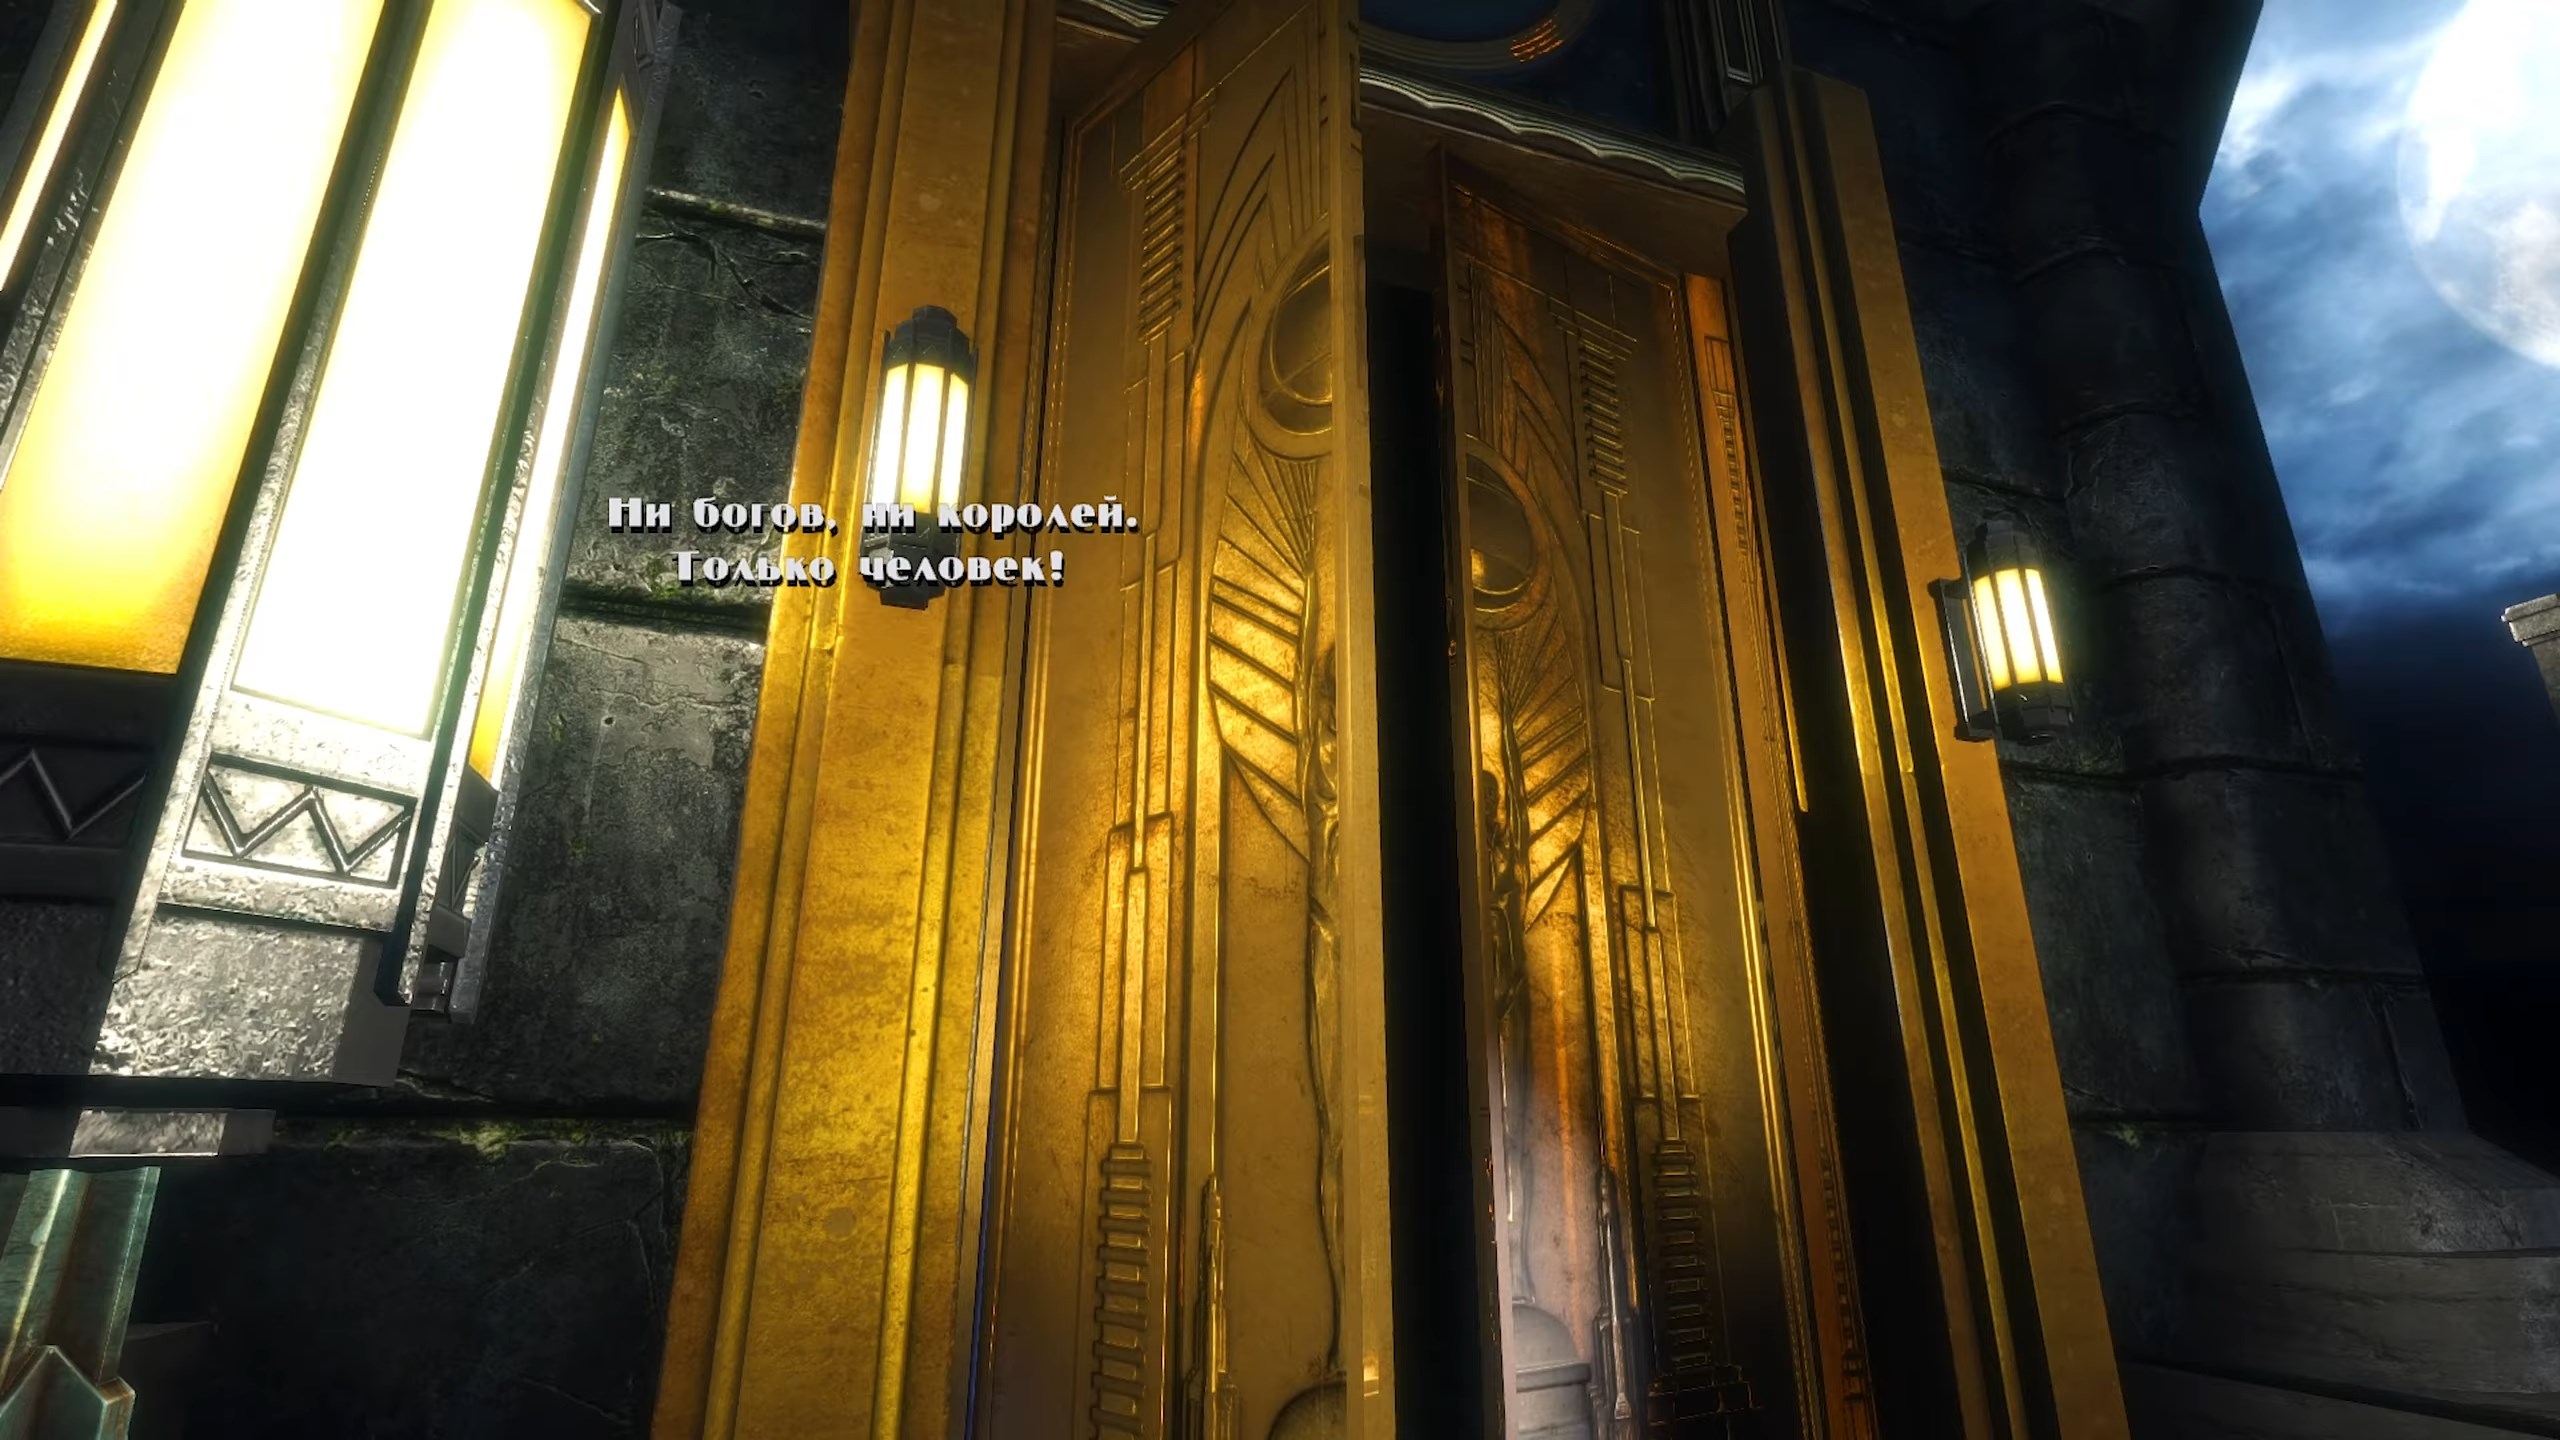 BioShock: Remastered скриншот (фото)